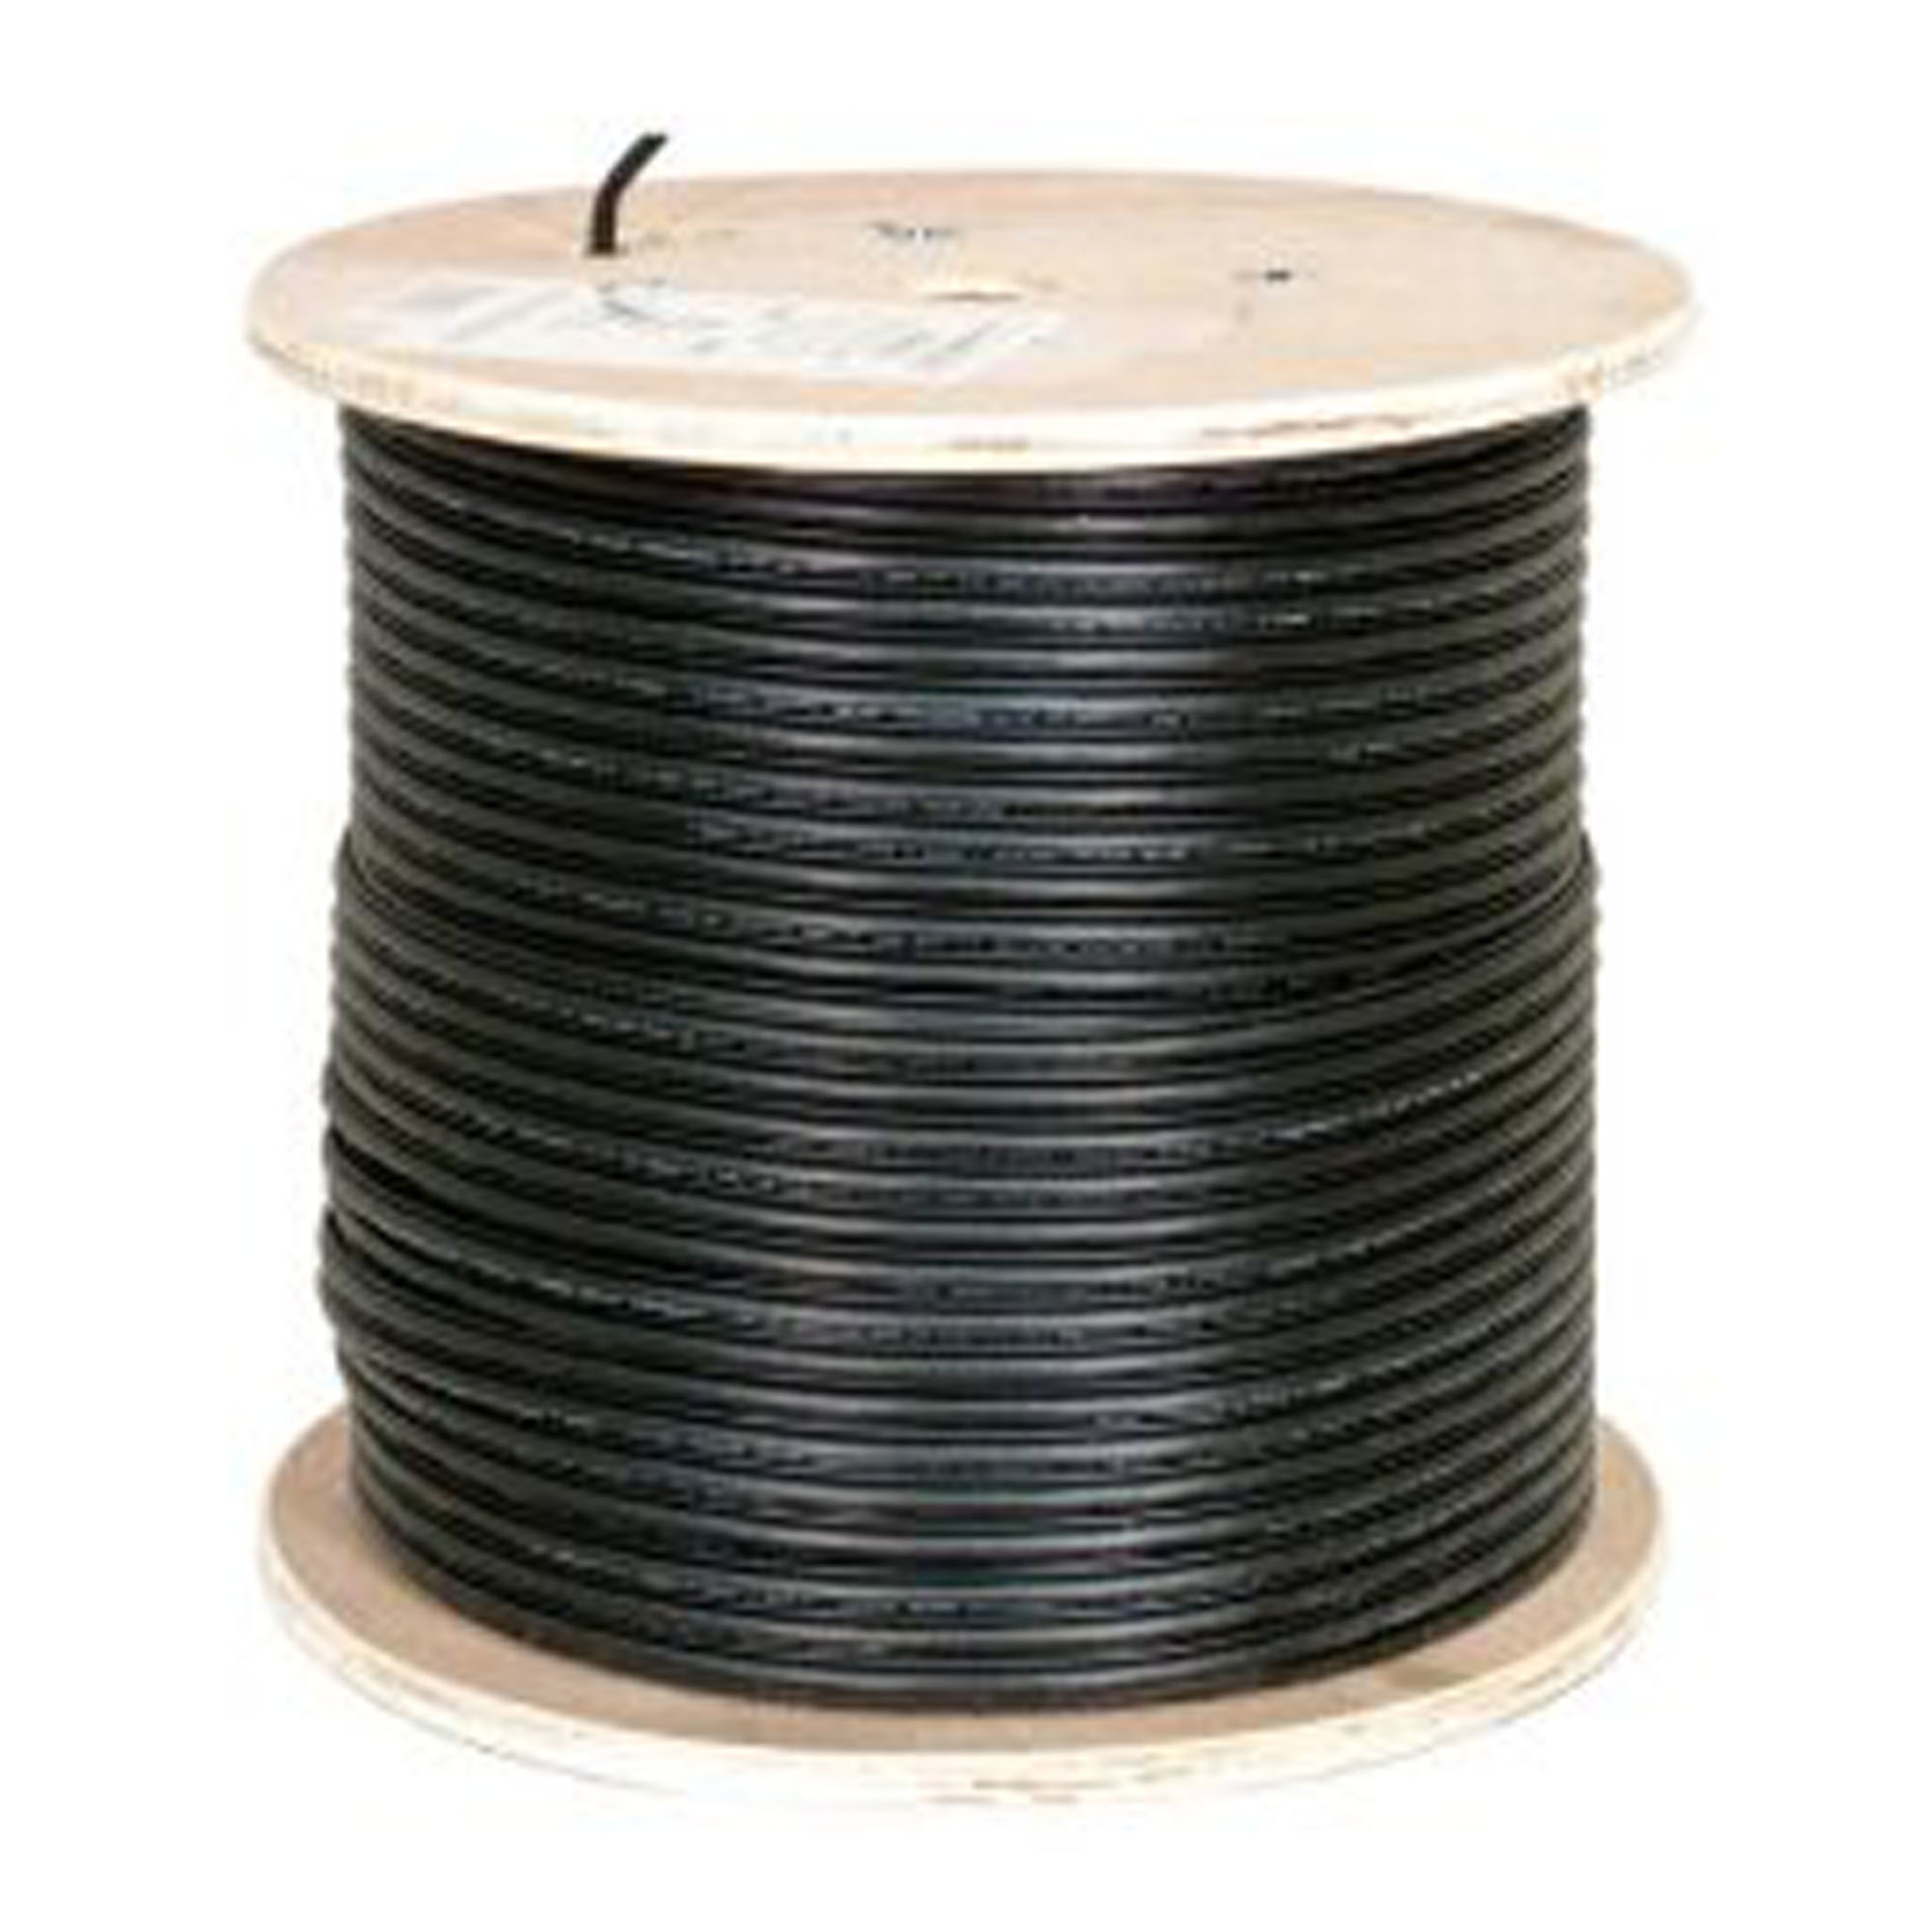 FTTH Drop Cable / Optical Fiber Cable / Fiber Optic Cable